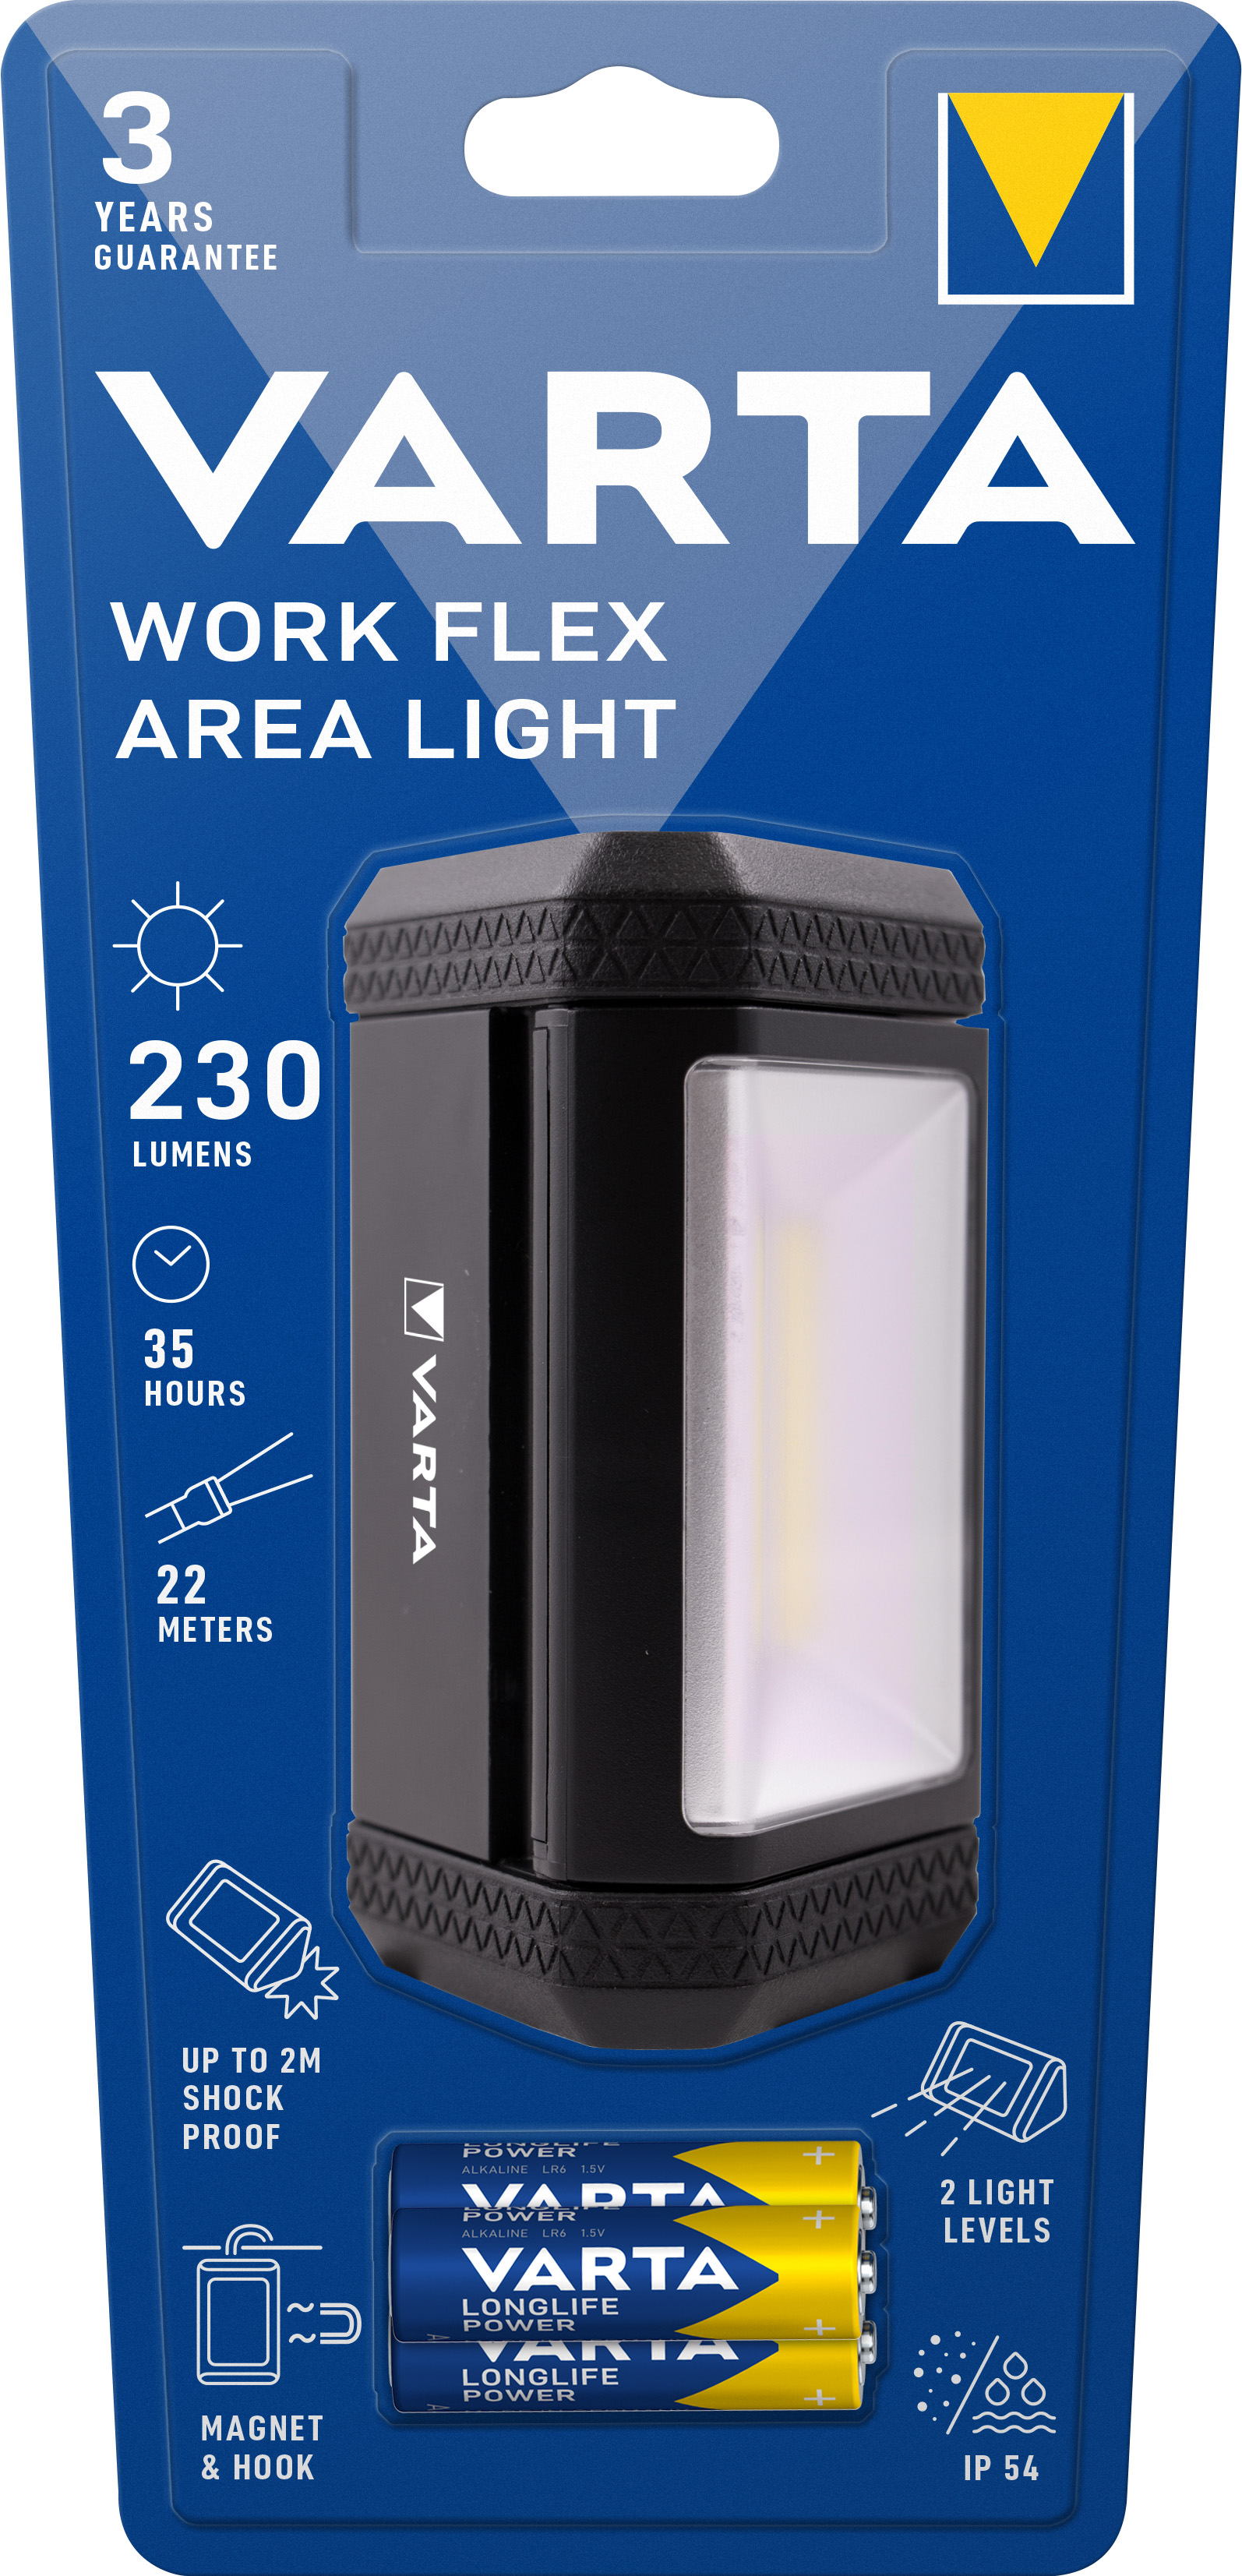 Varta LED Taschenlampe Work Flex Line, Area Light 230lm, inkl. 3x Batterie Alkaline AA, Retail Blister